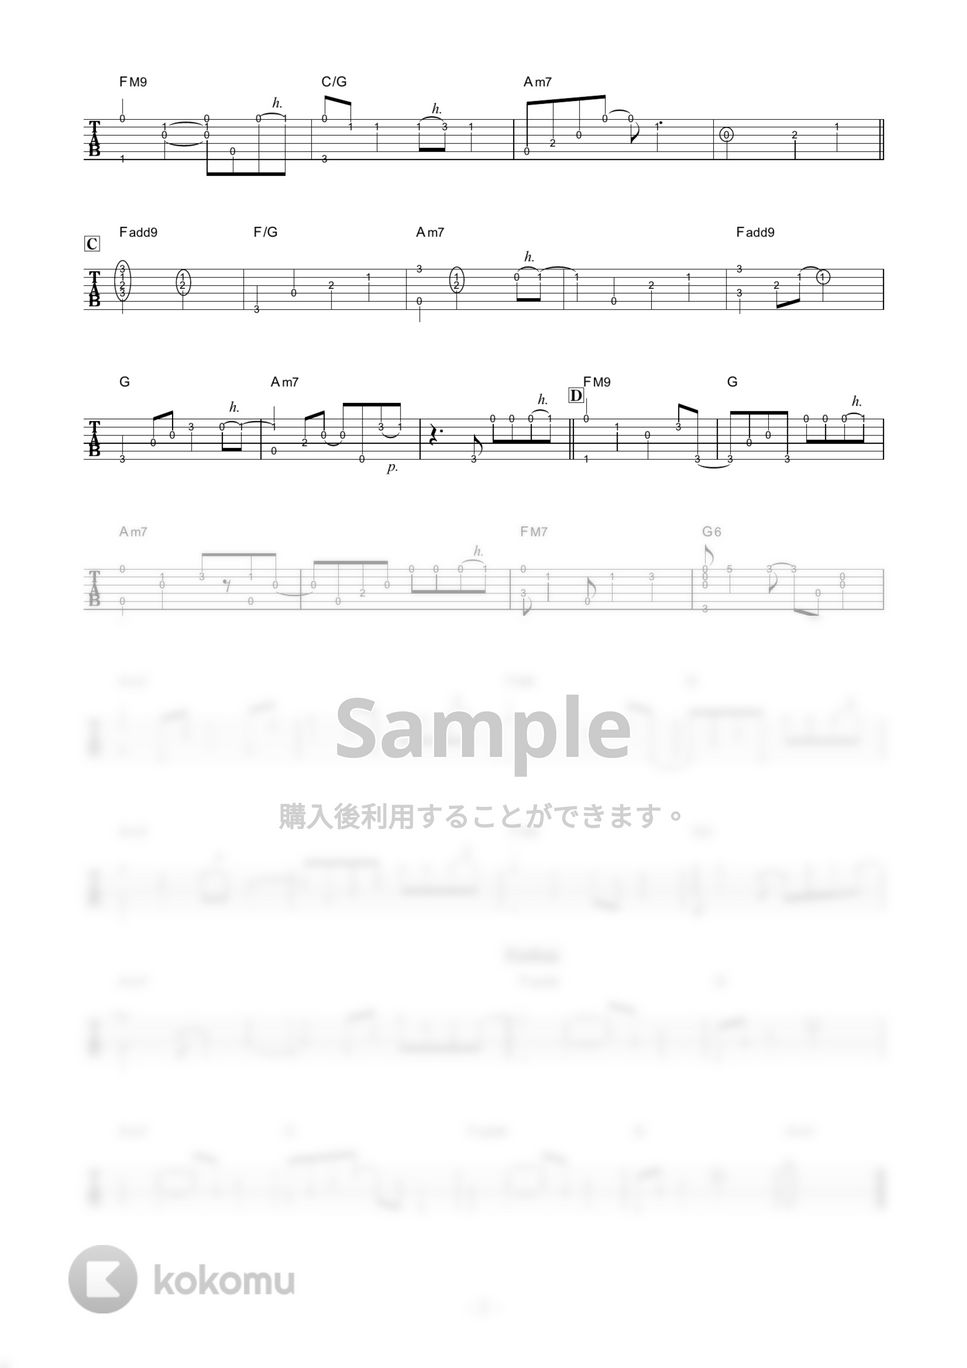 mol-74 - エイプリル (かんたんソロギター) by 伴奏屋TAB譜